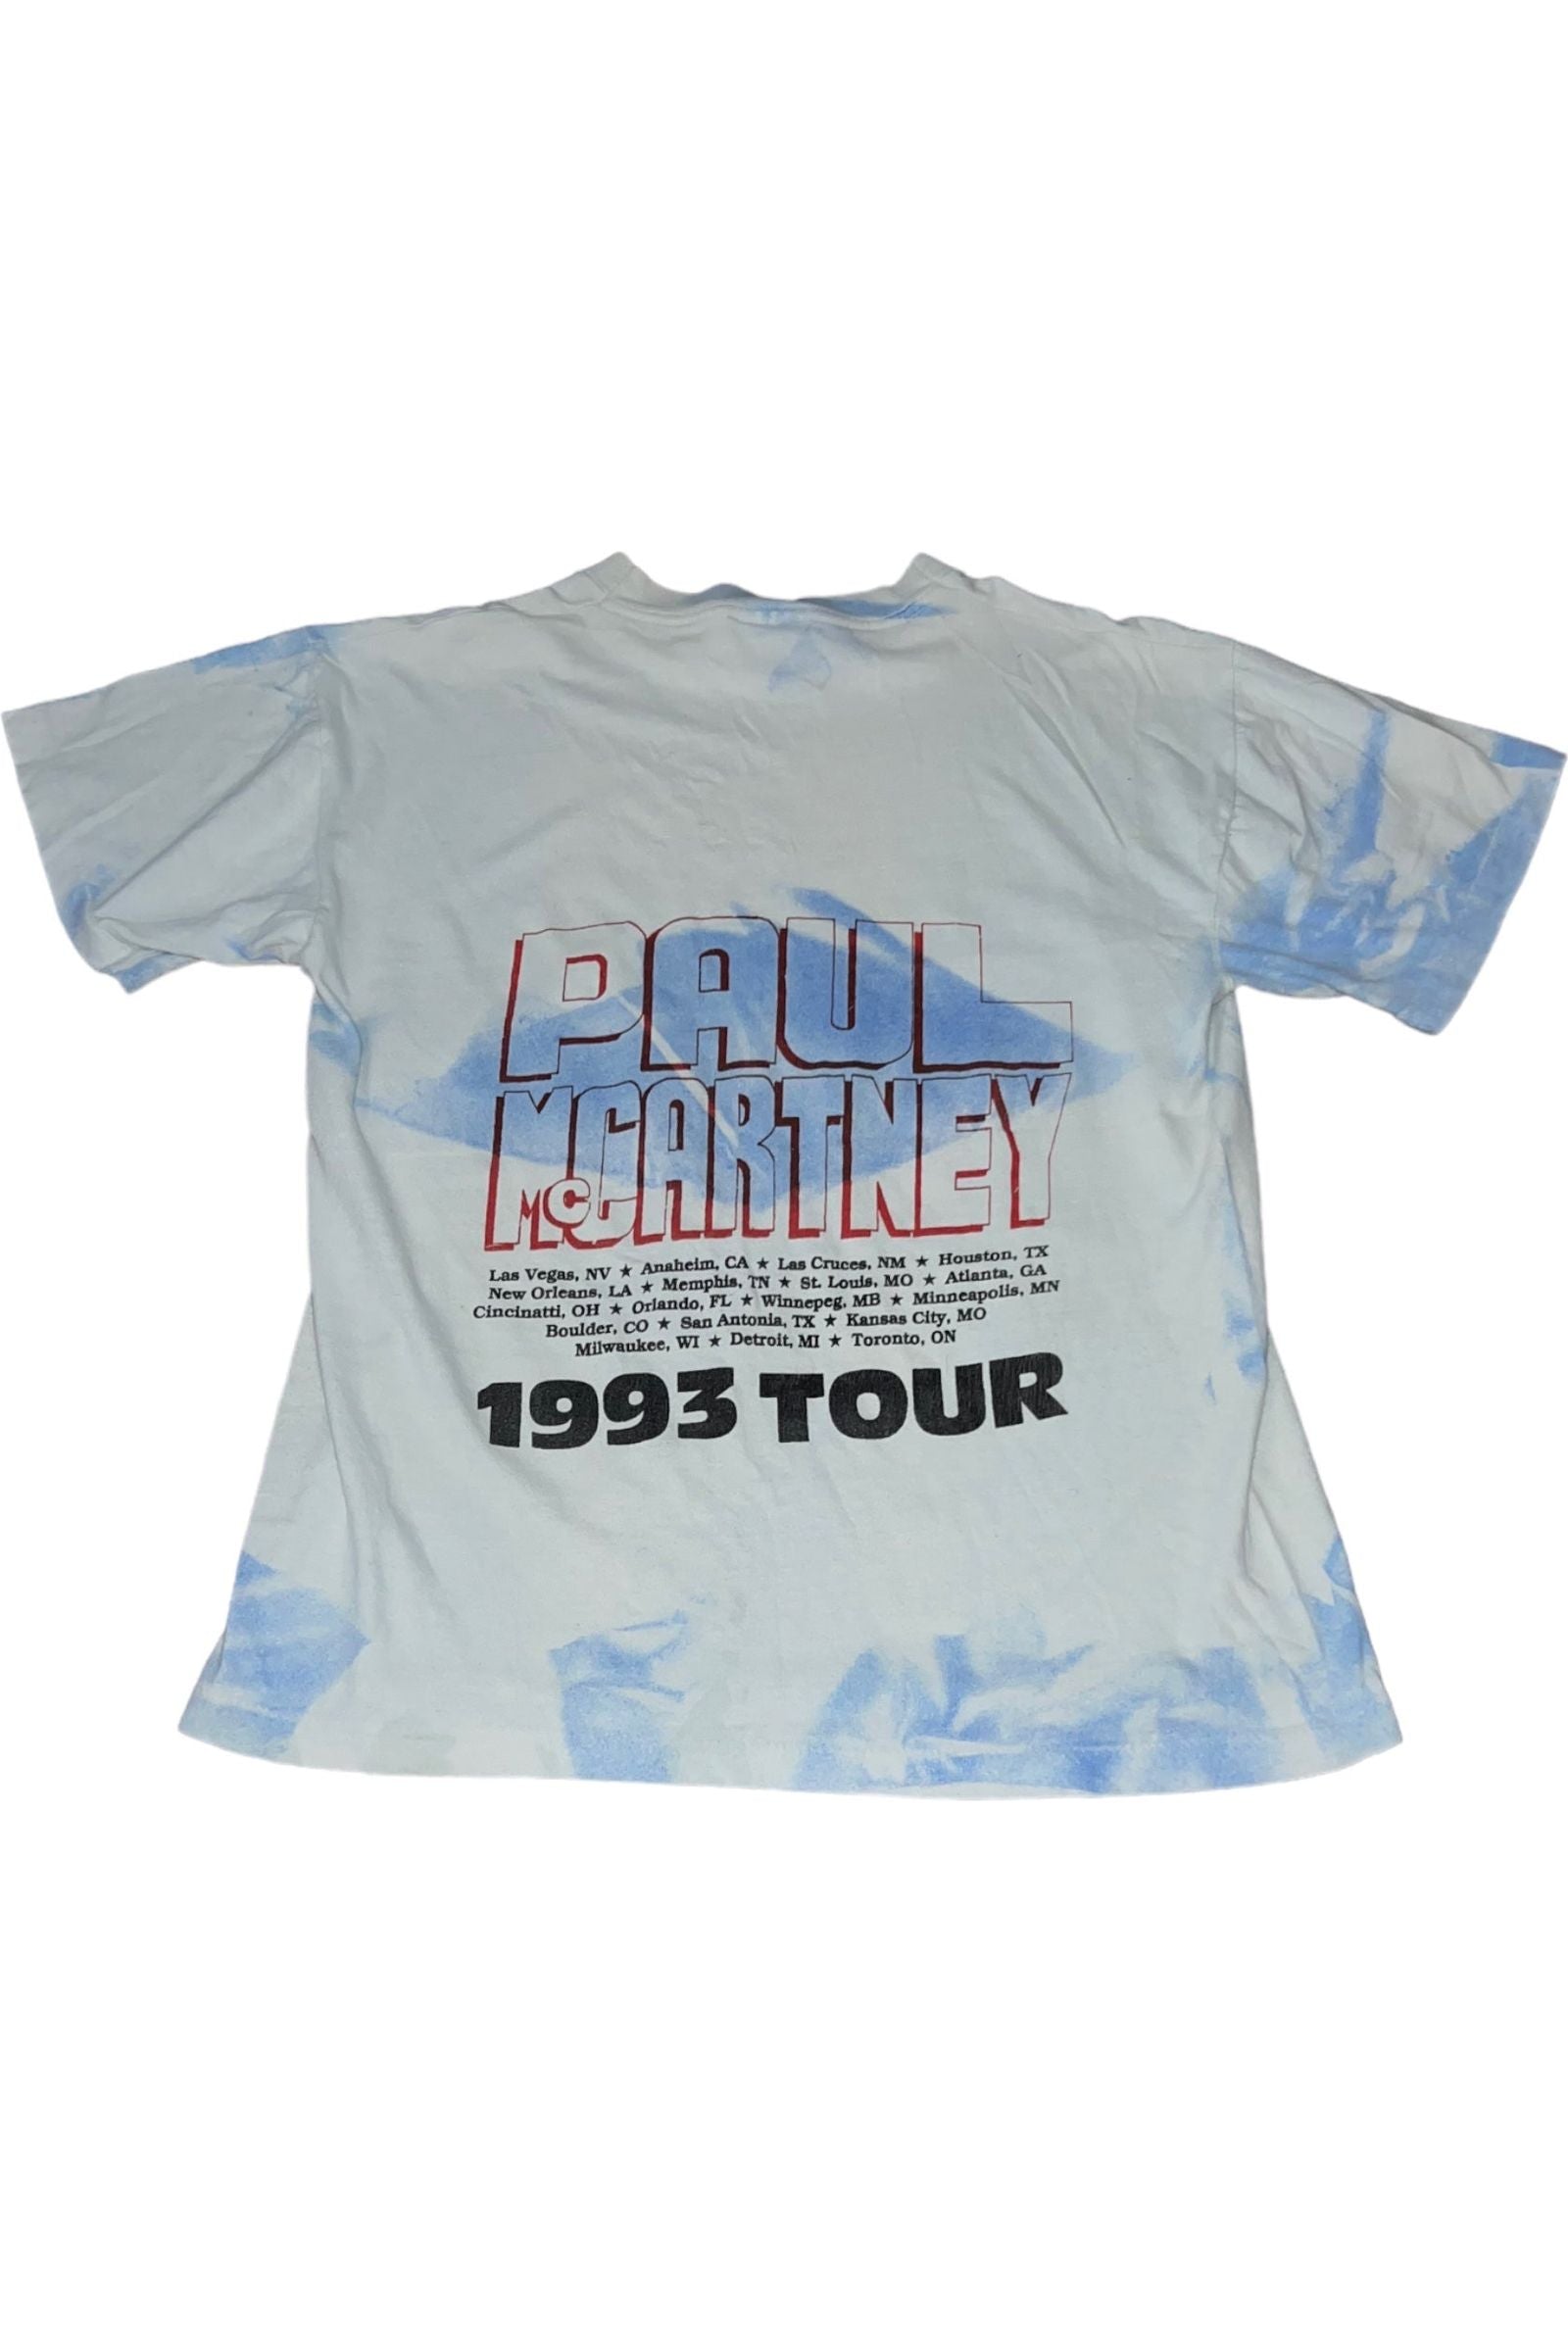 Paul McCartney 1993 Tour - La Kultura